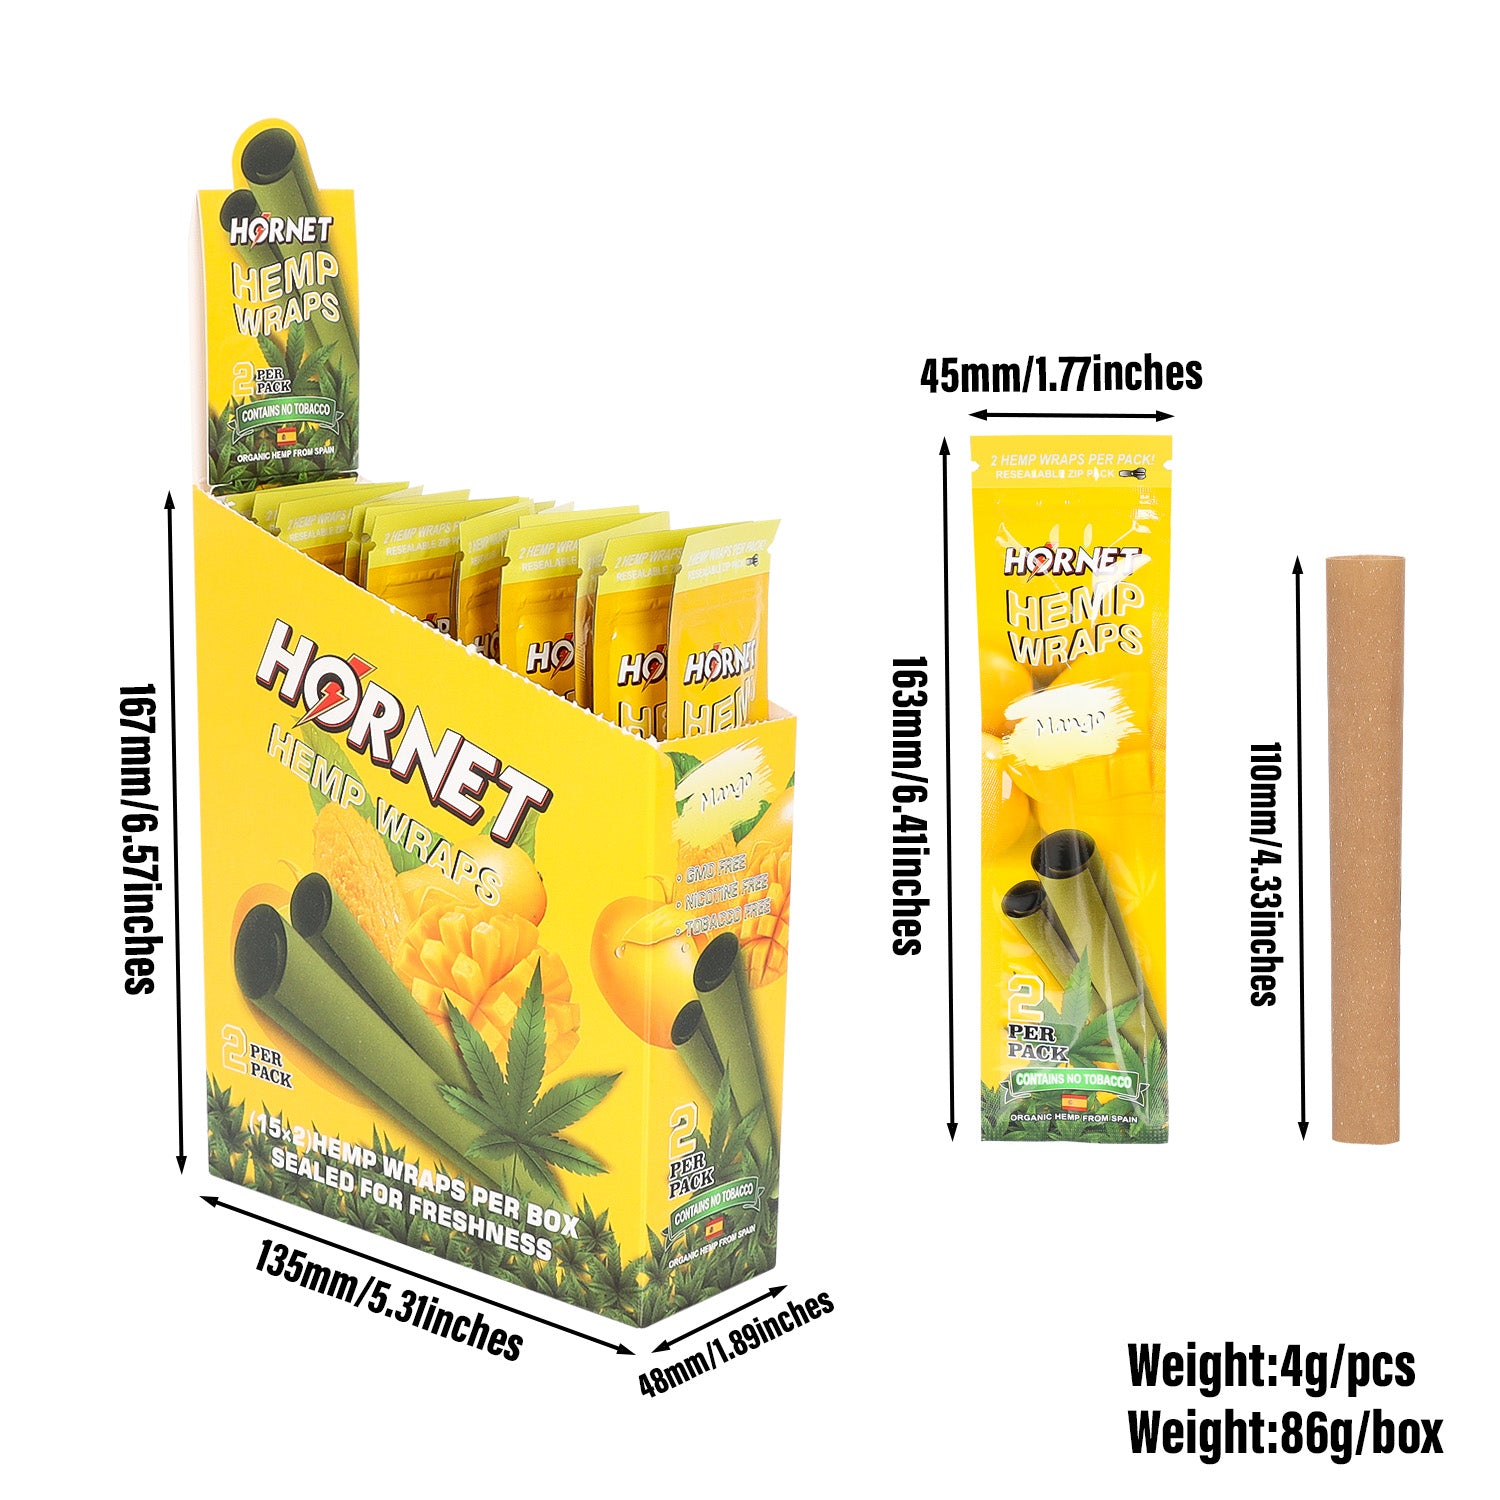 Hornet Mango Flavoured Hemp Blunt Wraps 30 Hemp Wraps Per Box